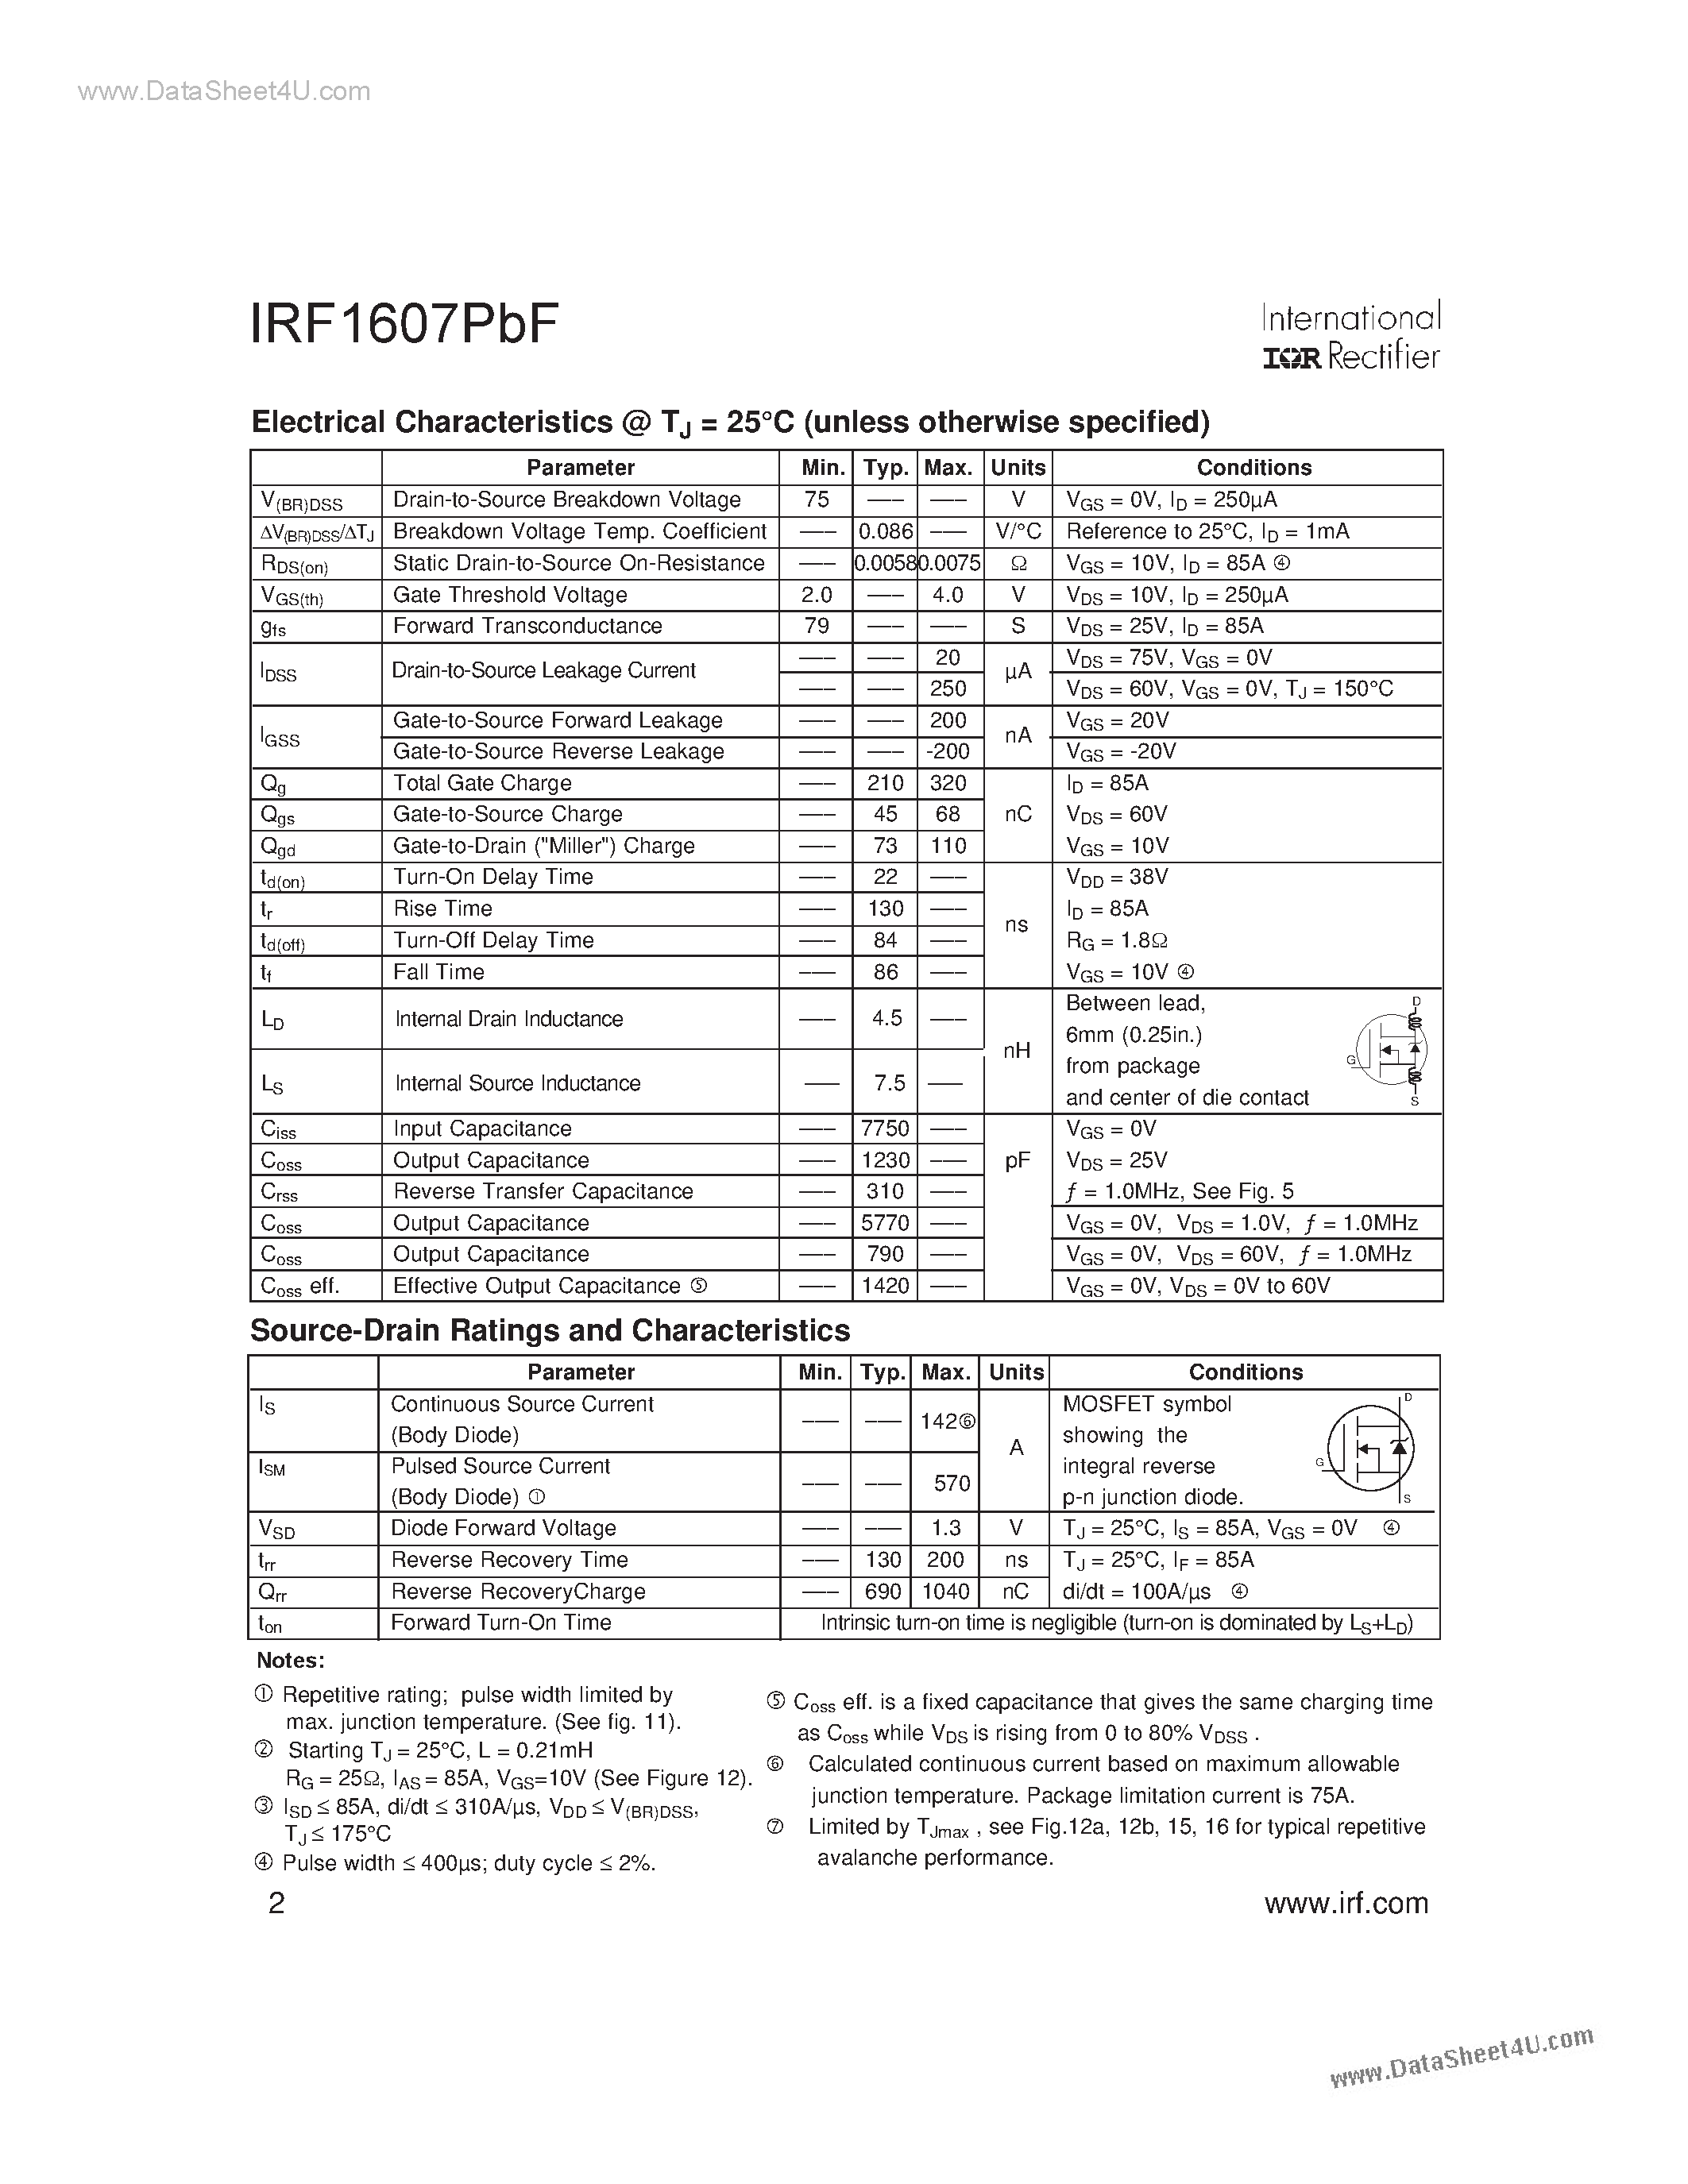 Даташит IRF1607PBF - AUTOMOTIVE MOSFET страница 2